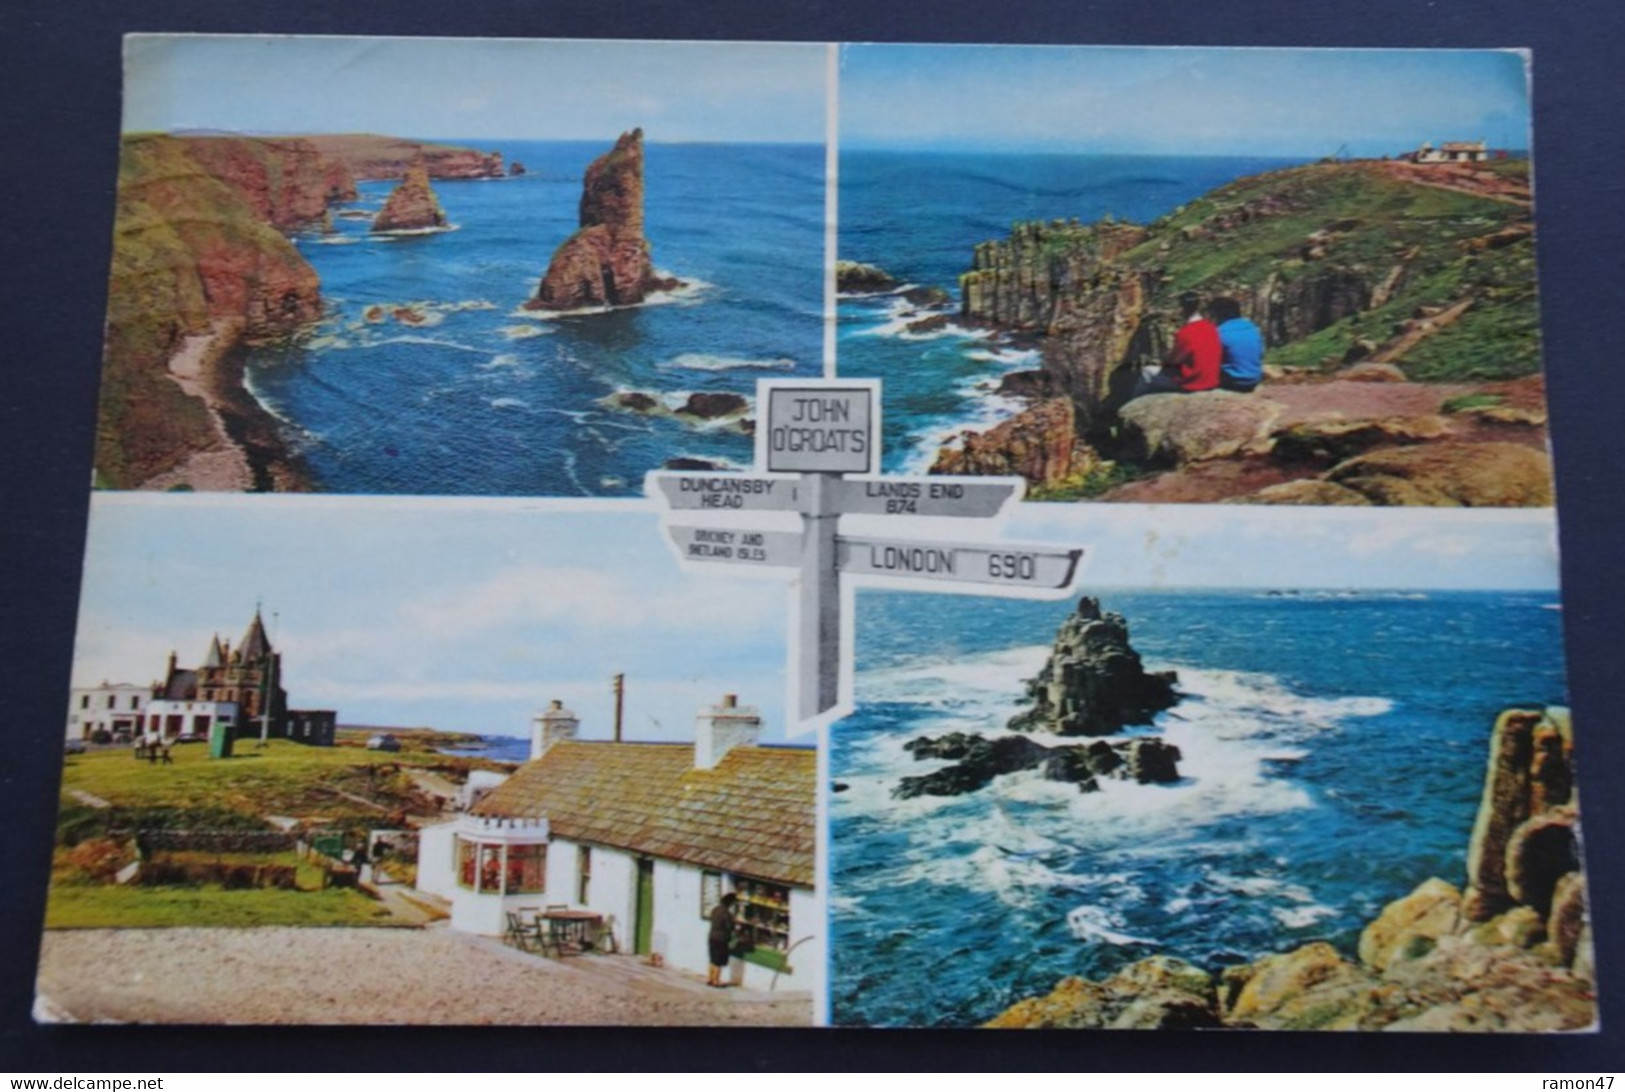 John O'Groats - Photo Precision Ltd., St. Ives, Huntingdon - Caithness